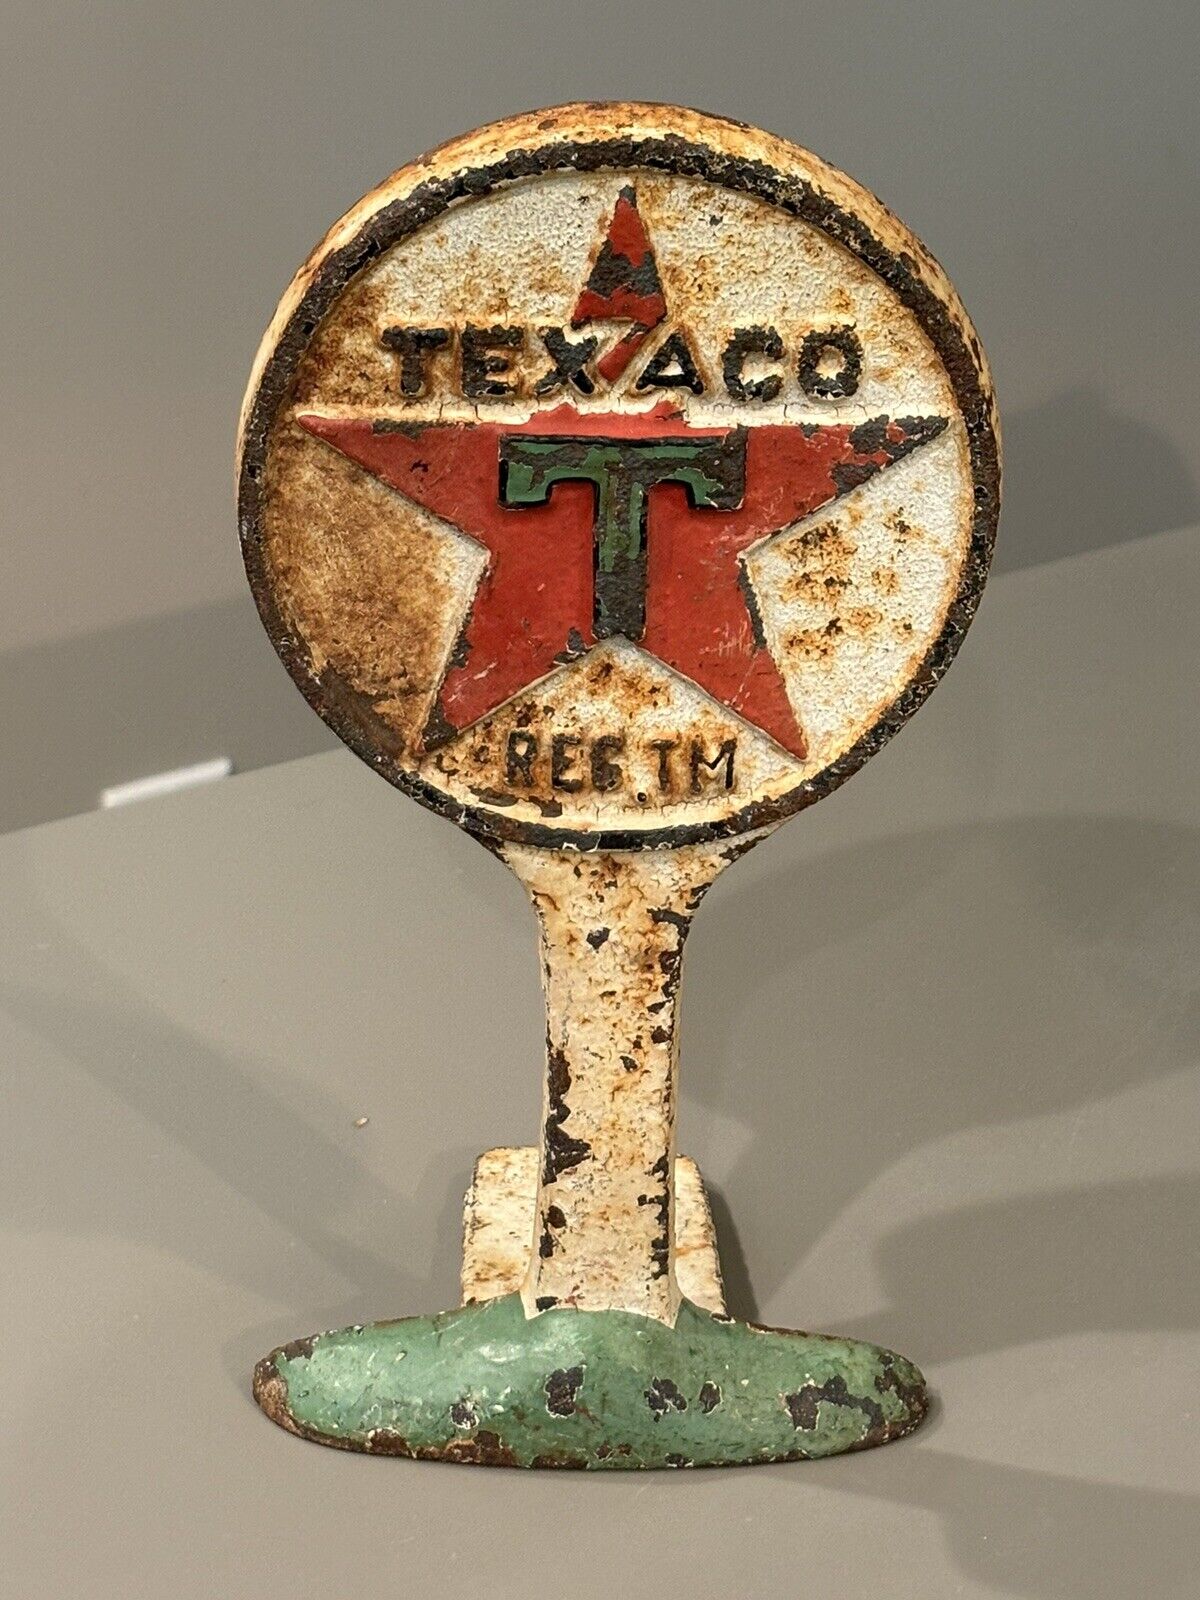 Texaco Doorstop, Cast Iron Paperweight Decor Collectible, Vintage Gas Oil